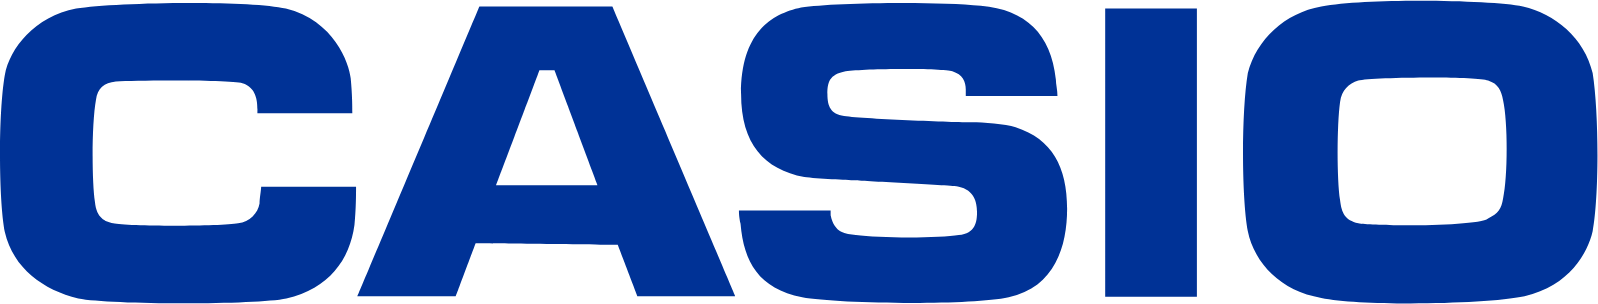 CASIO logo large (transparent PNG)